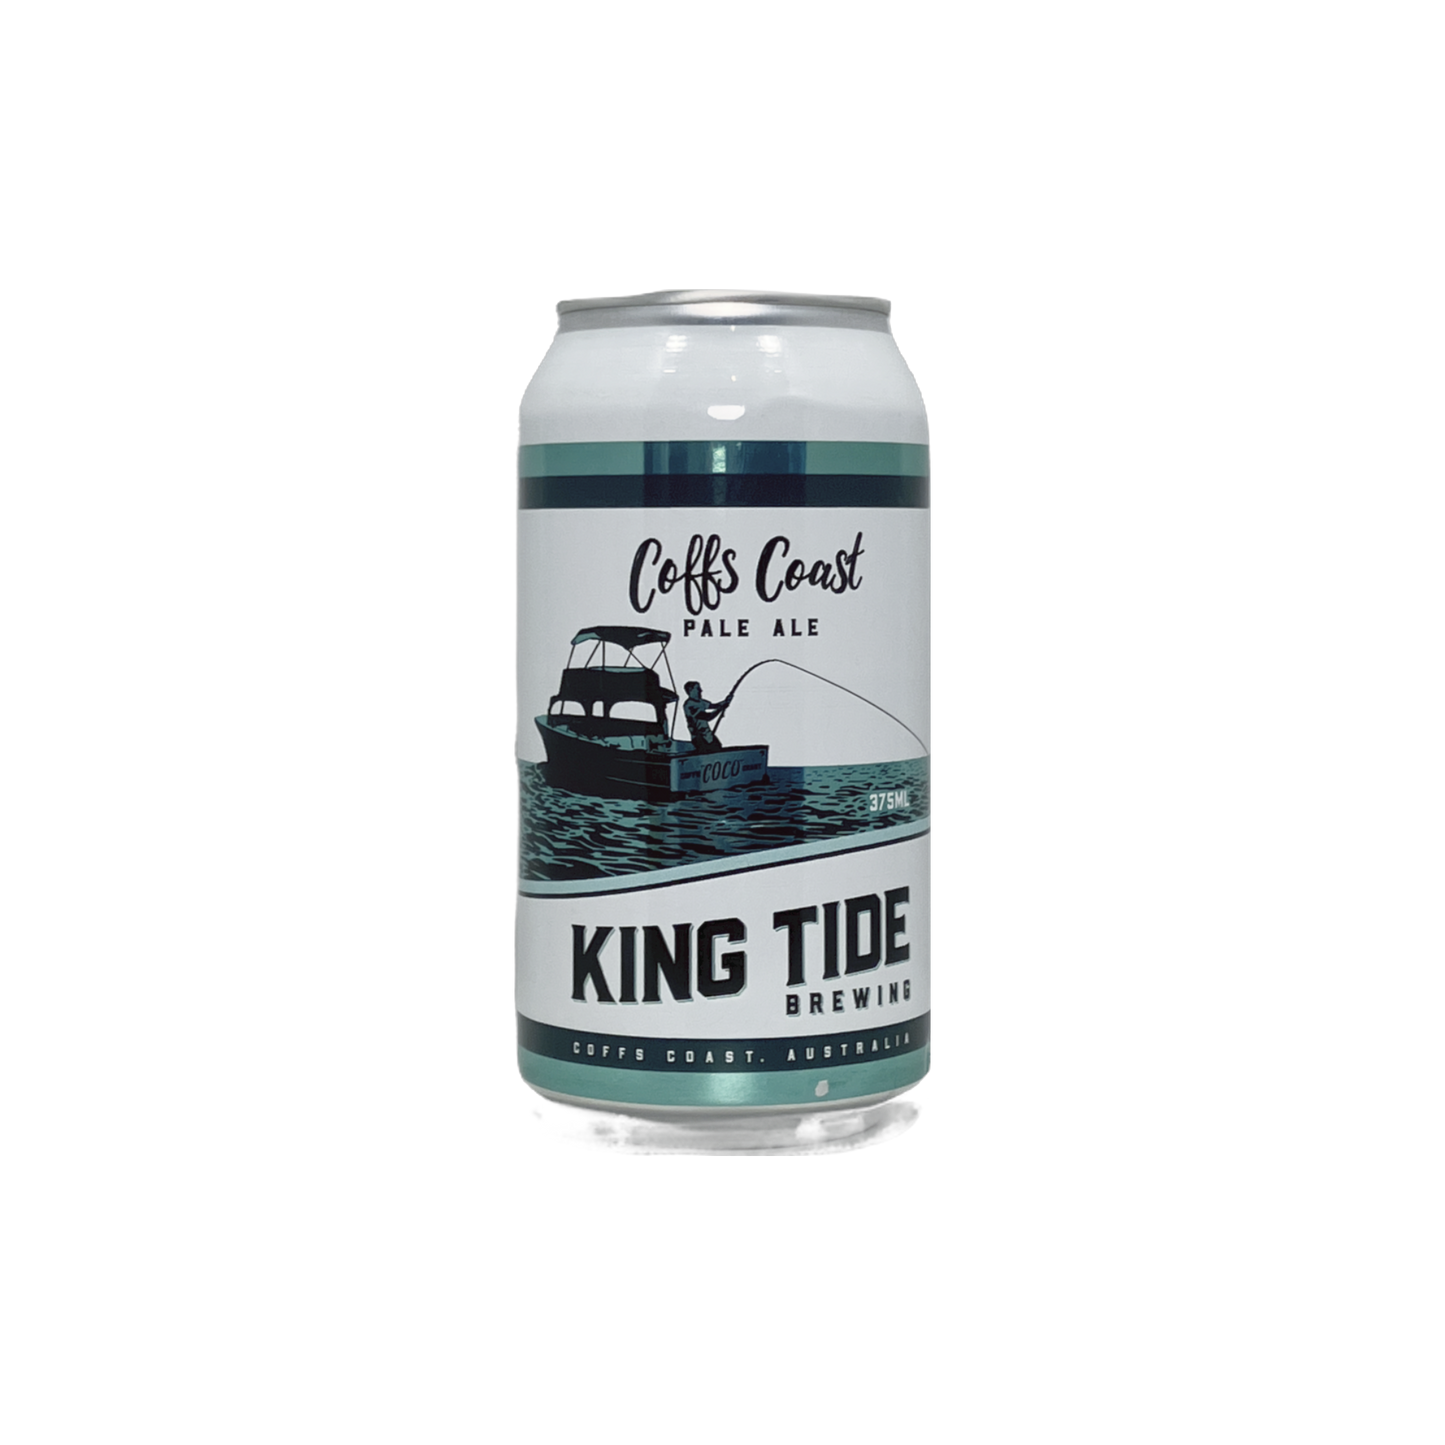 King Tide Coffs Coast Pale Ale 375ml